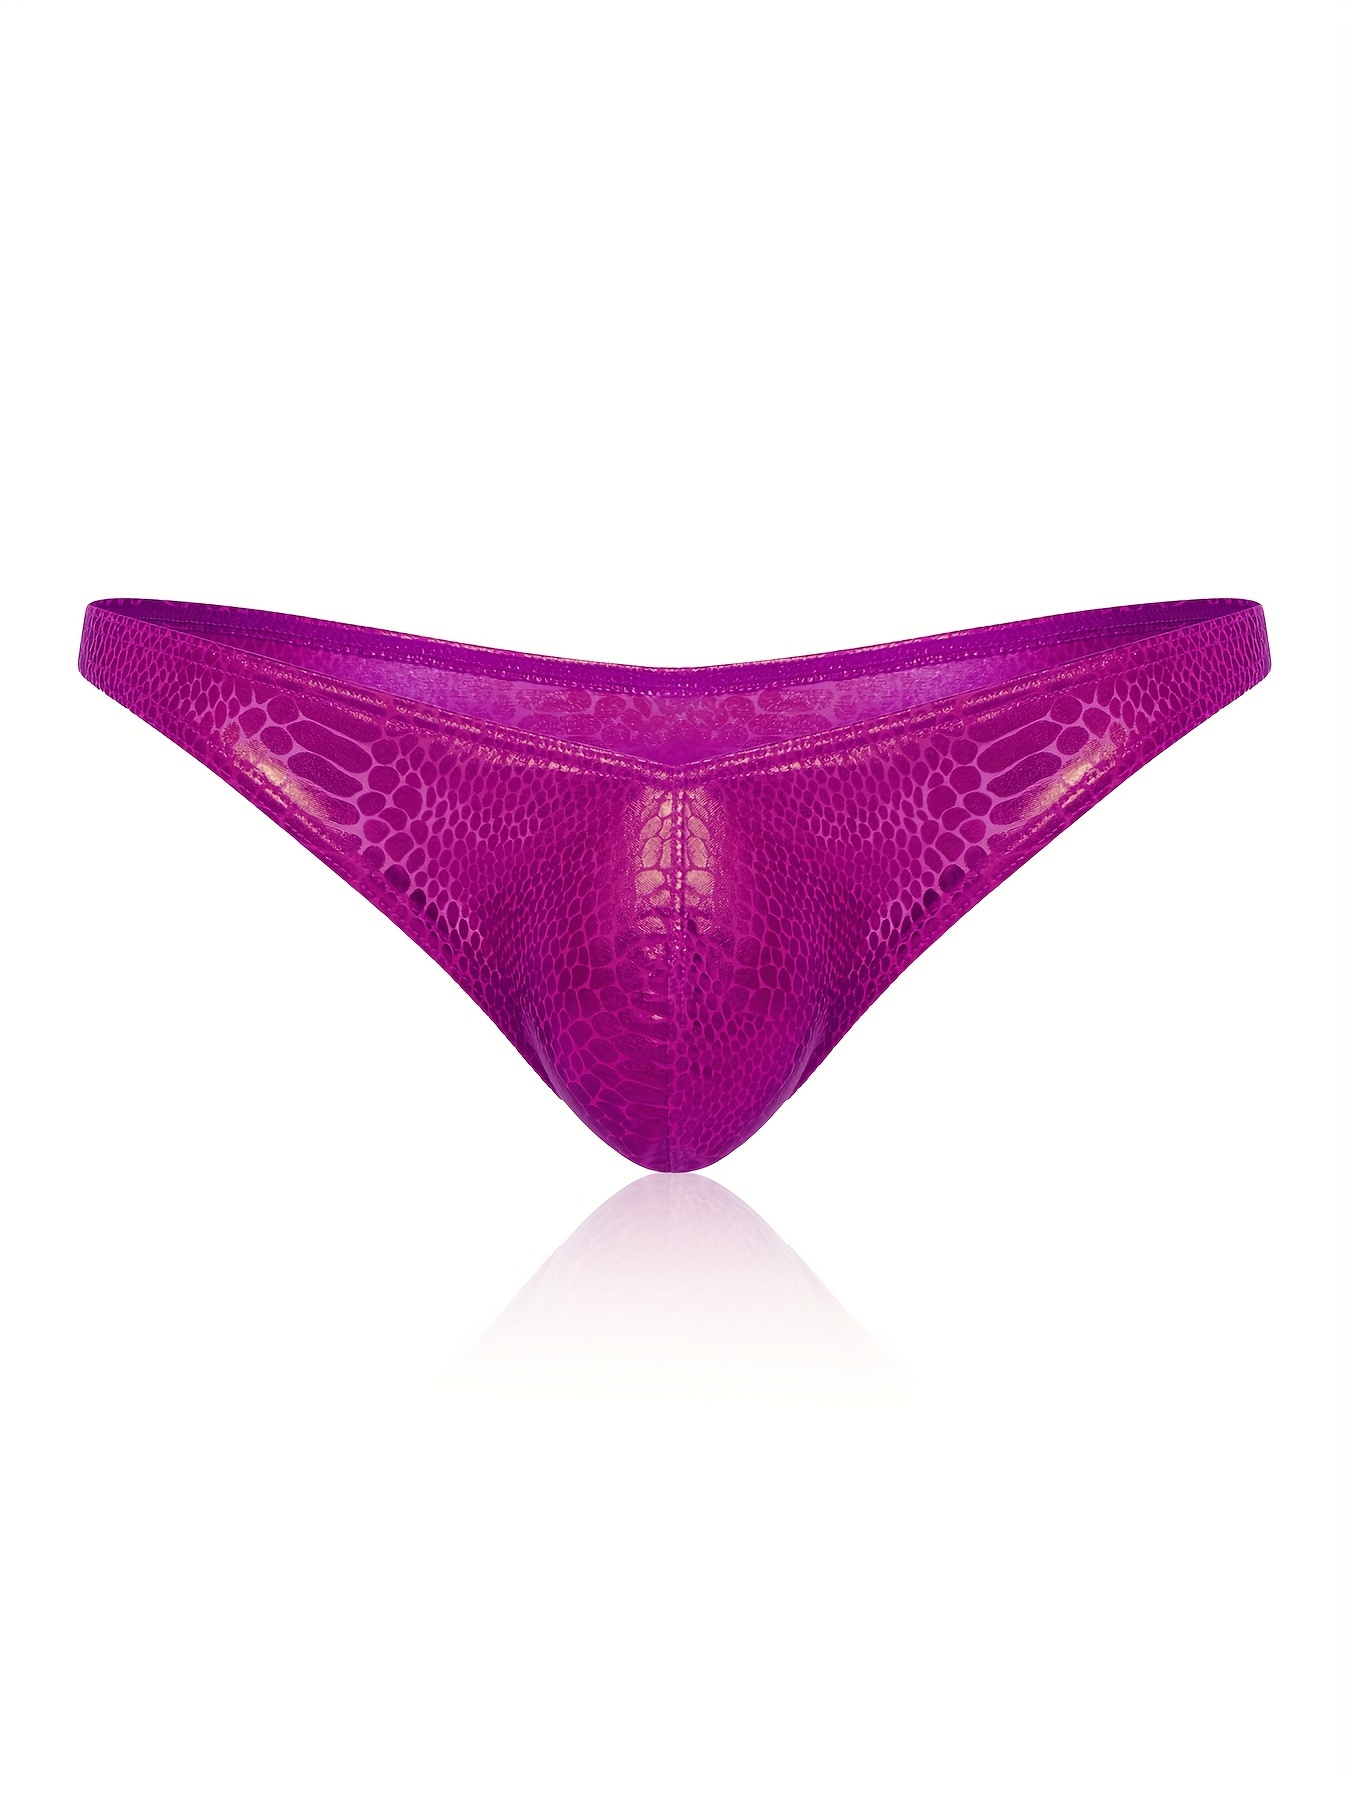 Men's String Pouch Briefs Whale Tail Underwear Mini Leopard Jockstrap  Bikinis